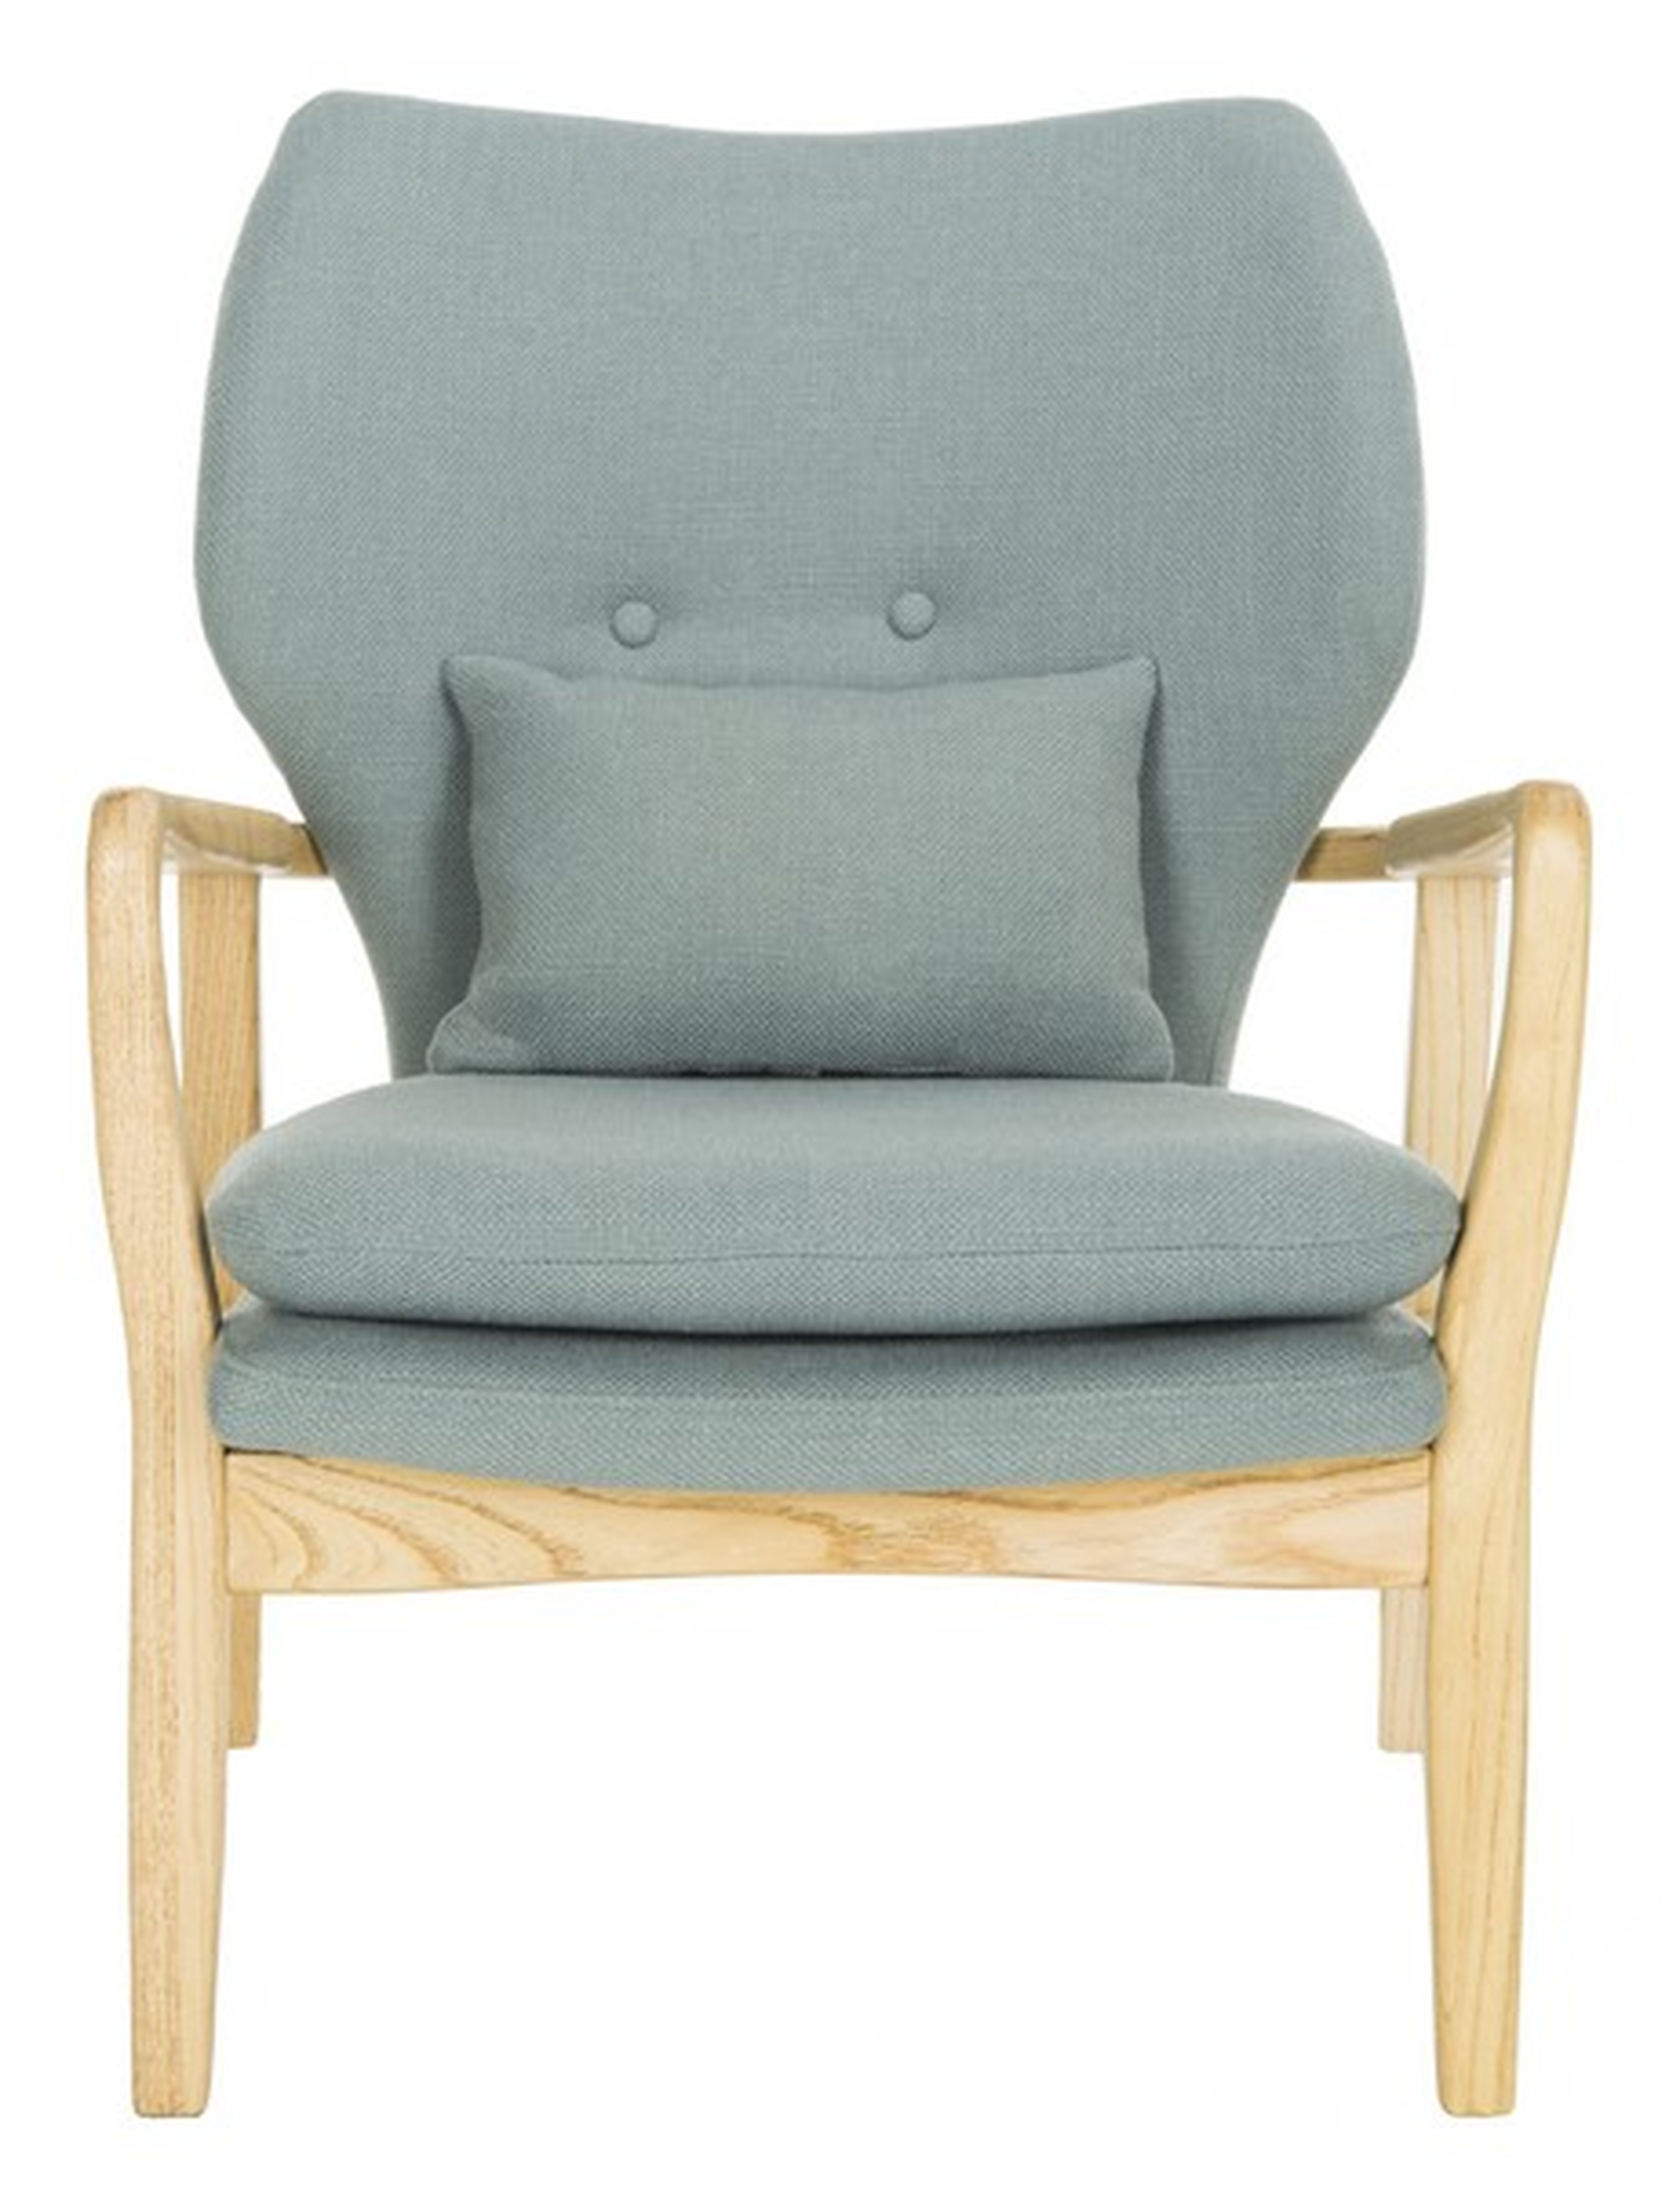 Tarly Accent Chair - Blue/Natural - Safavieh - Safavieh